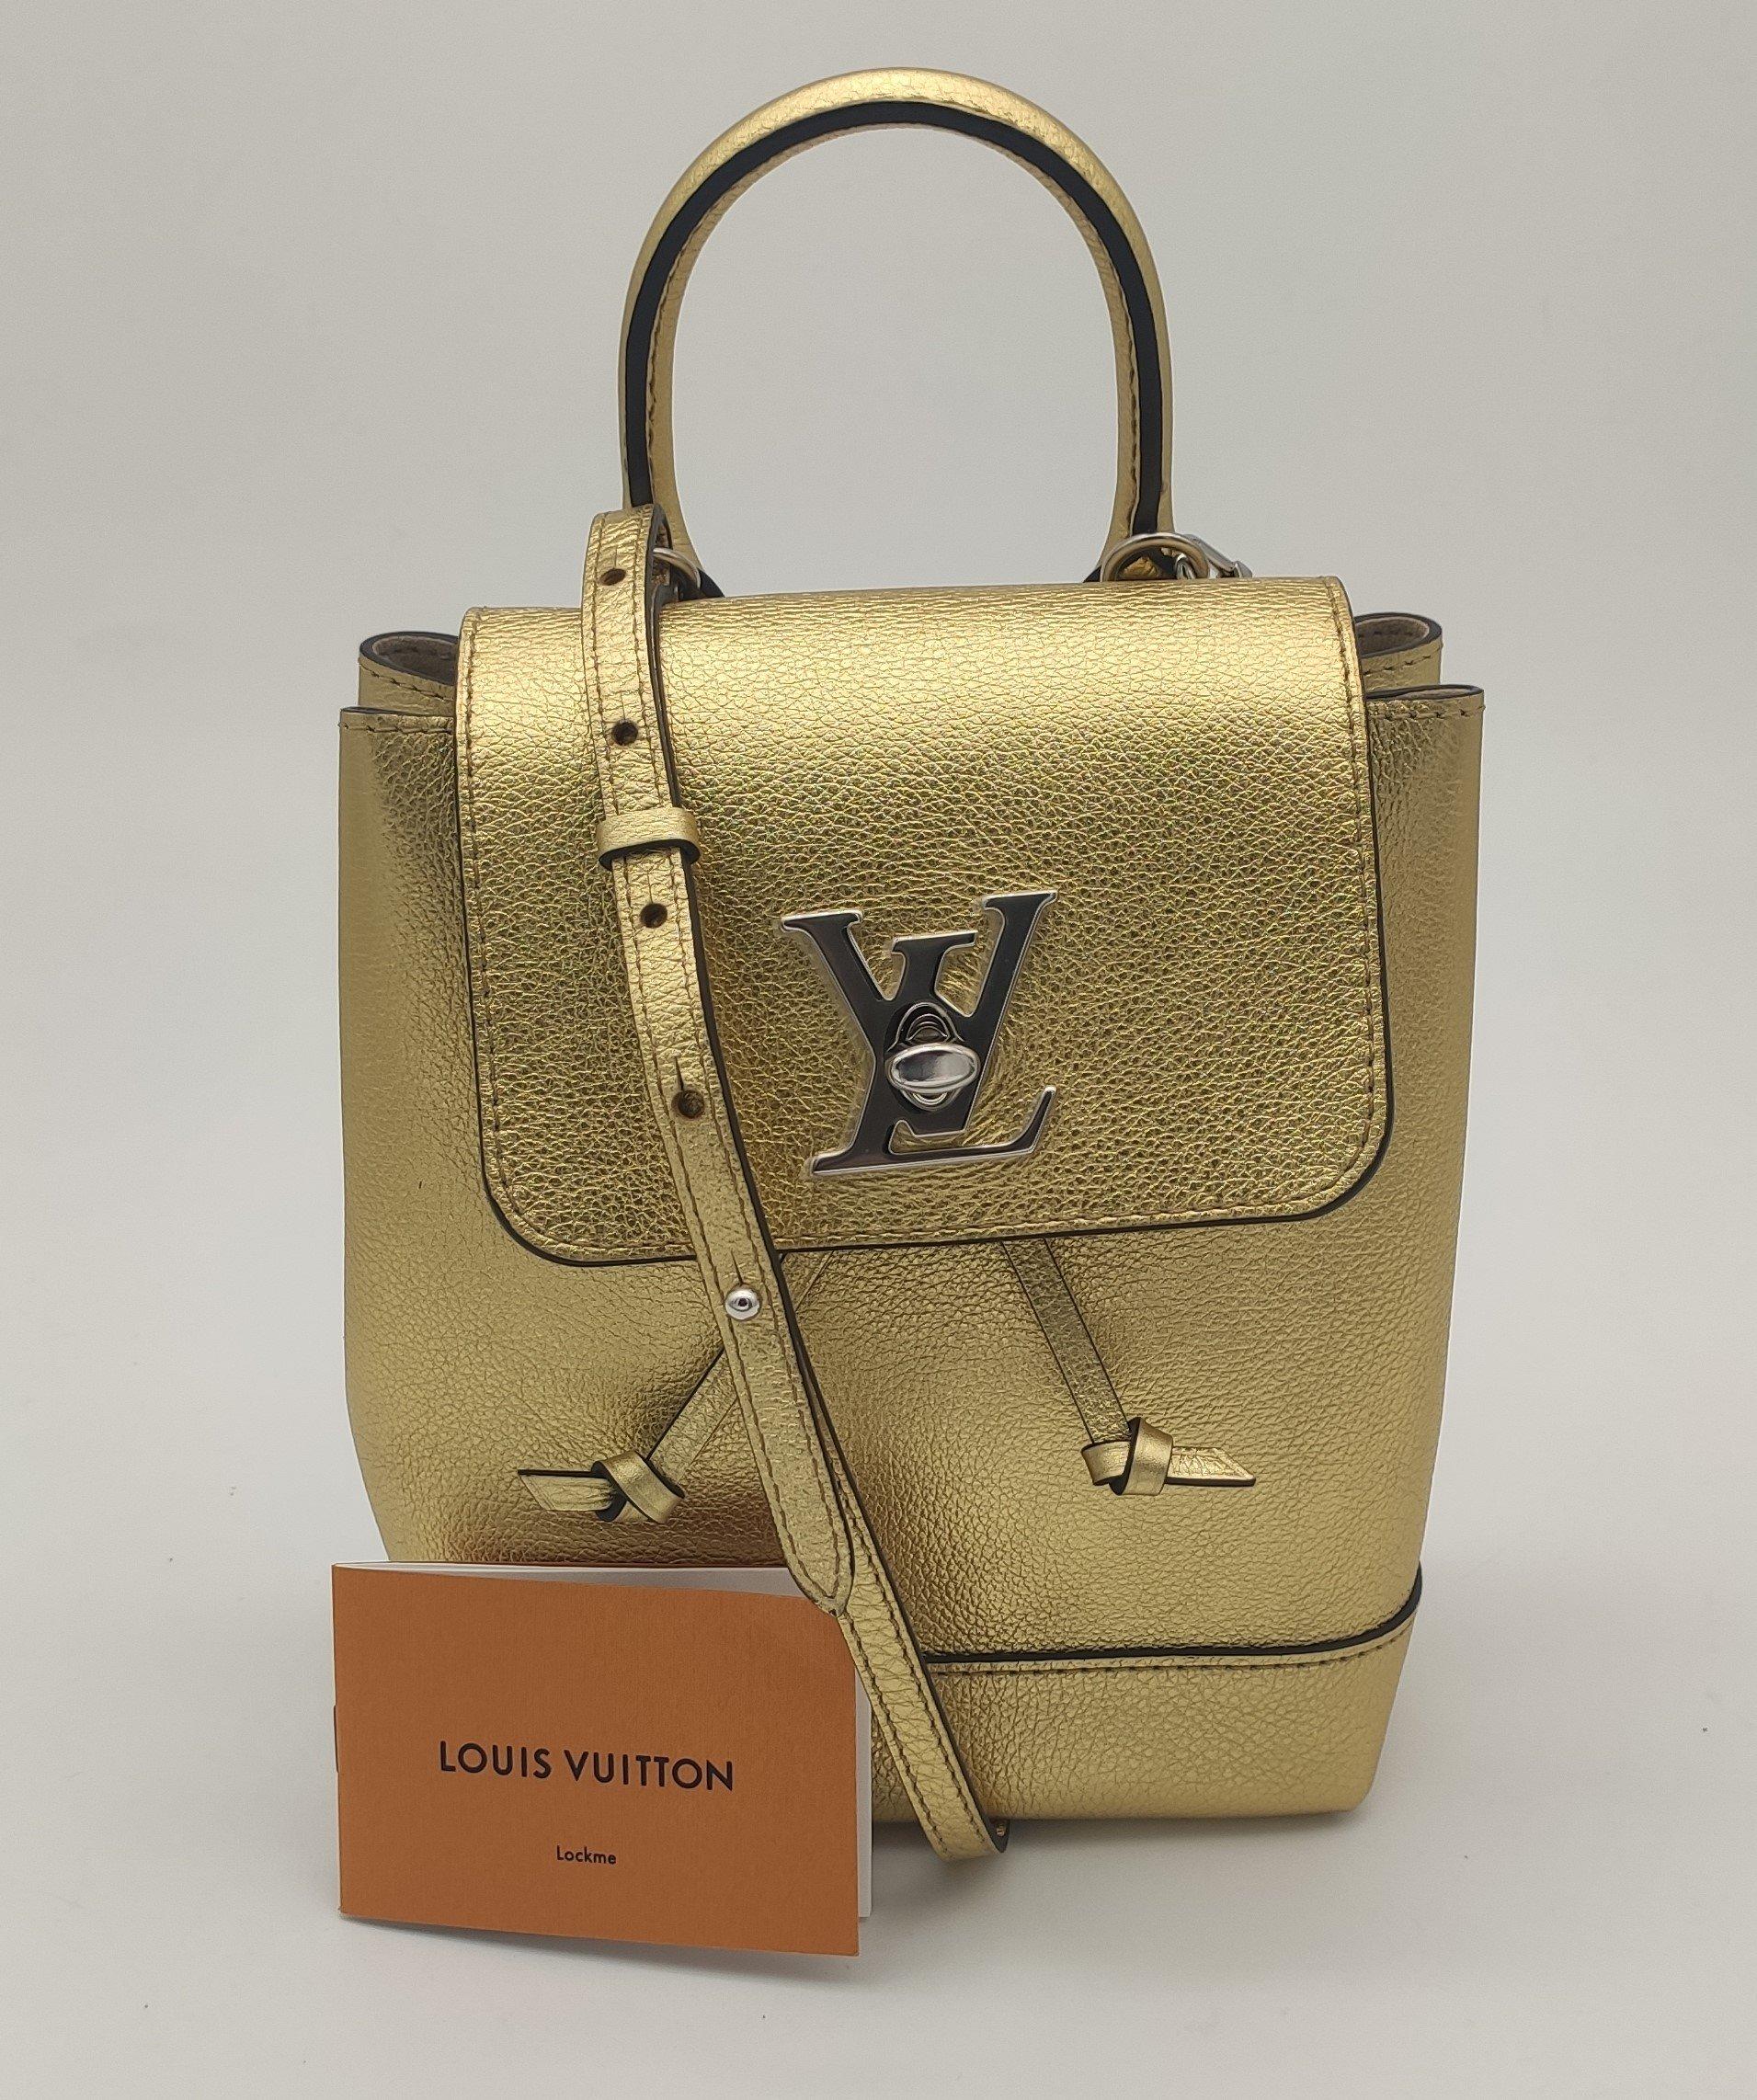 - Designer: LOUIS VUITTON
- Model: Lockme
- Condition: Very good condition. 
- Accessories: Dustbag, Purchase tag
- Measurements: Width: 18cm, Height: 21cm, Depth: 9cm, Strap: 75cm
- Exterior Material: Leather
- Exterior Color: Gold
- Interior